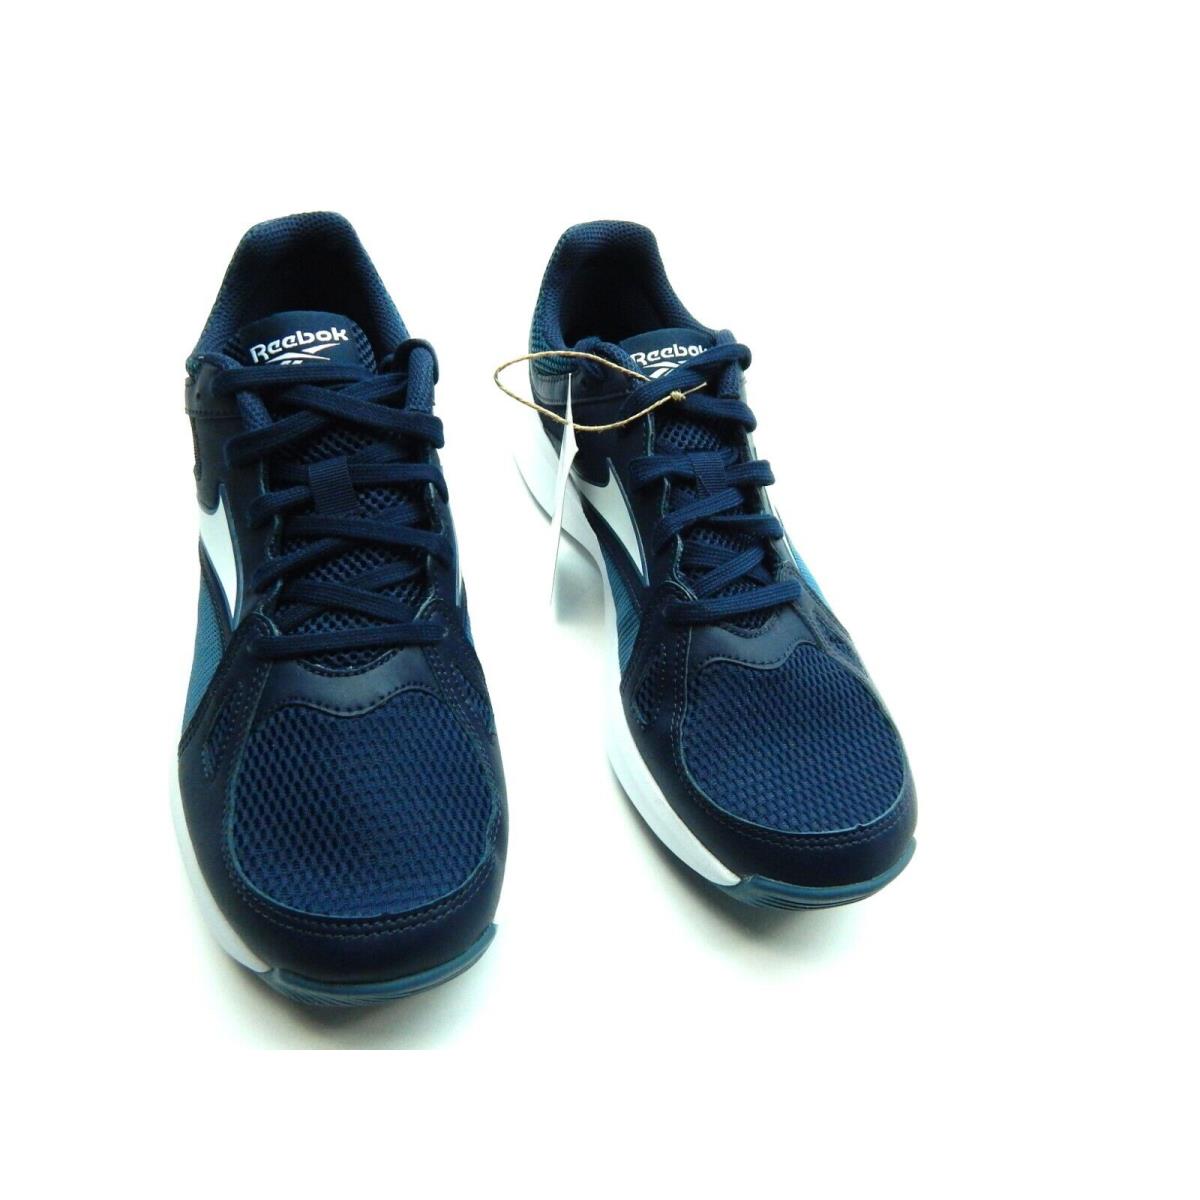 Reebok shoes Advanced Trainette - blue white 5